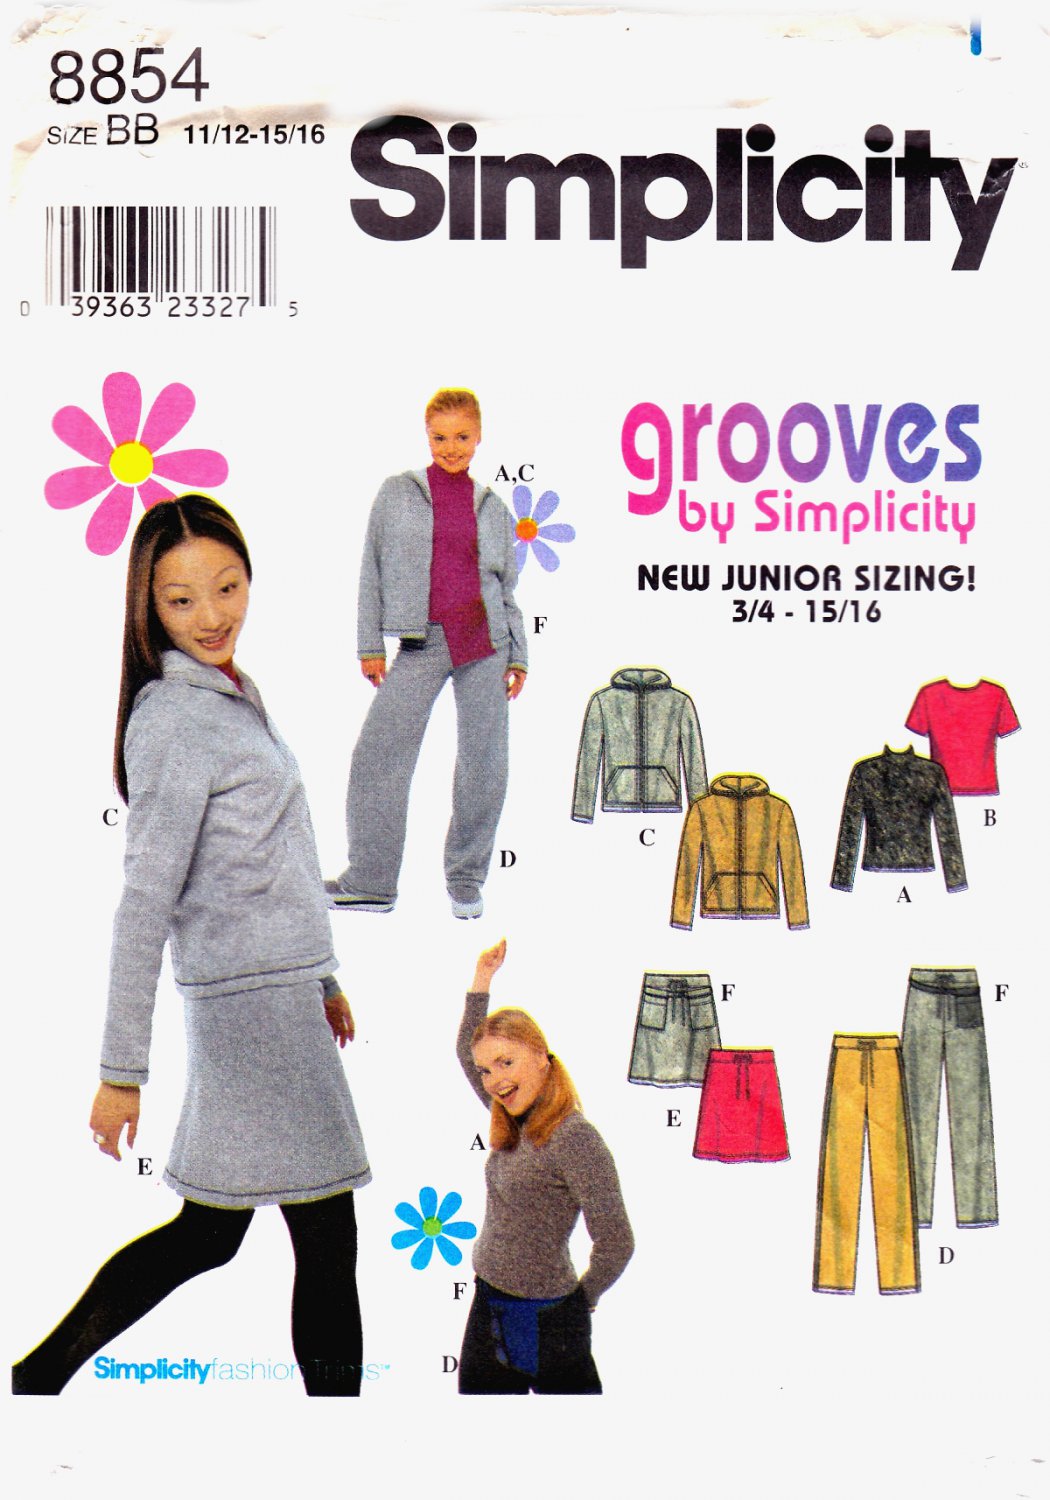 Simplicity 8854 Junior Girls Knit Top Pants Skirt Belt Sewing Pattern Sizes 11/12-15/16